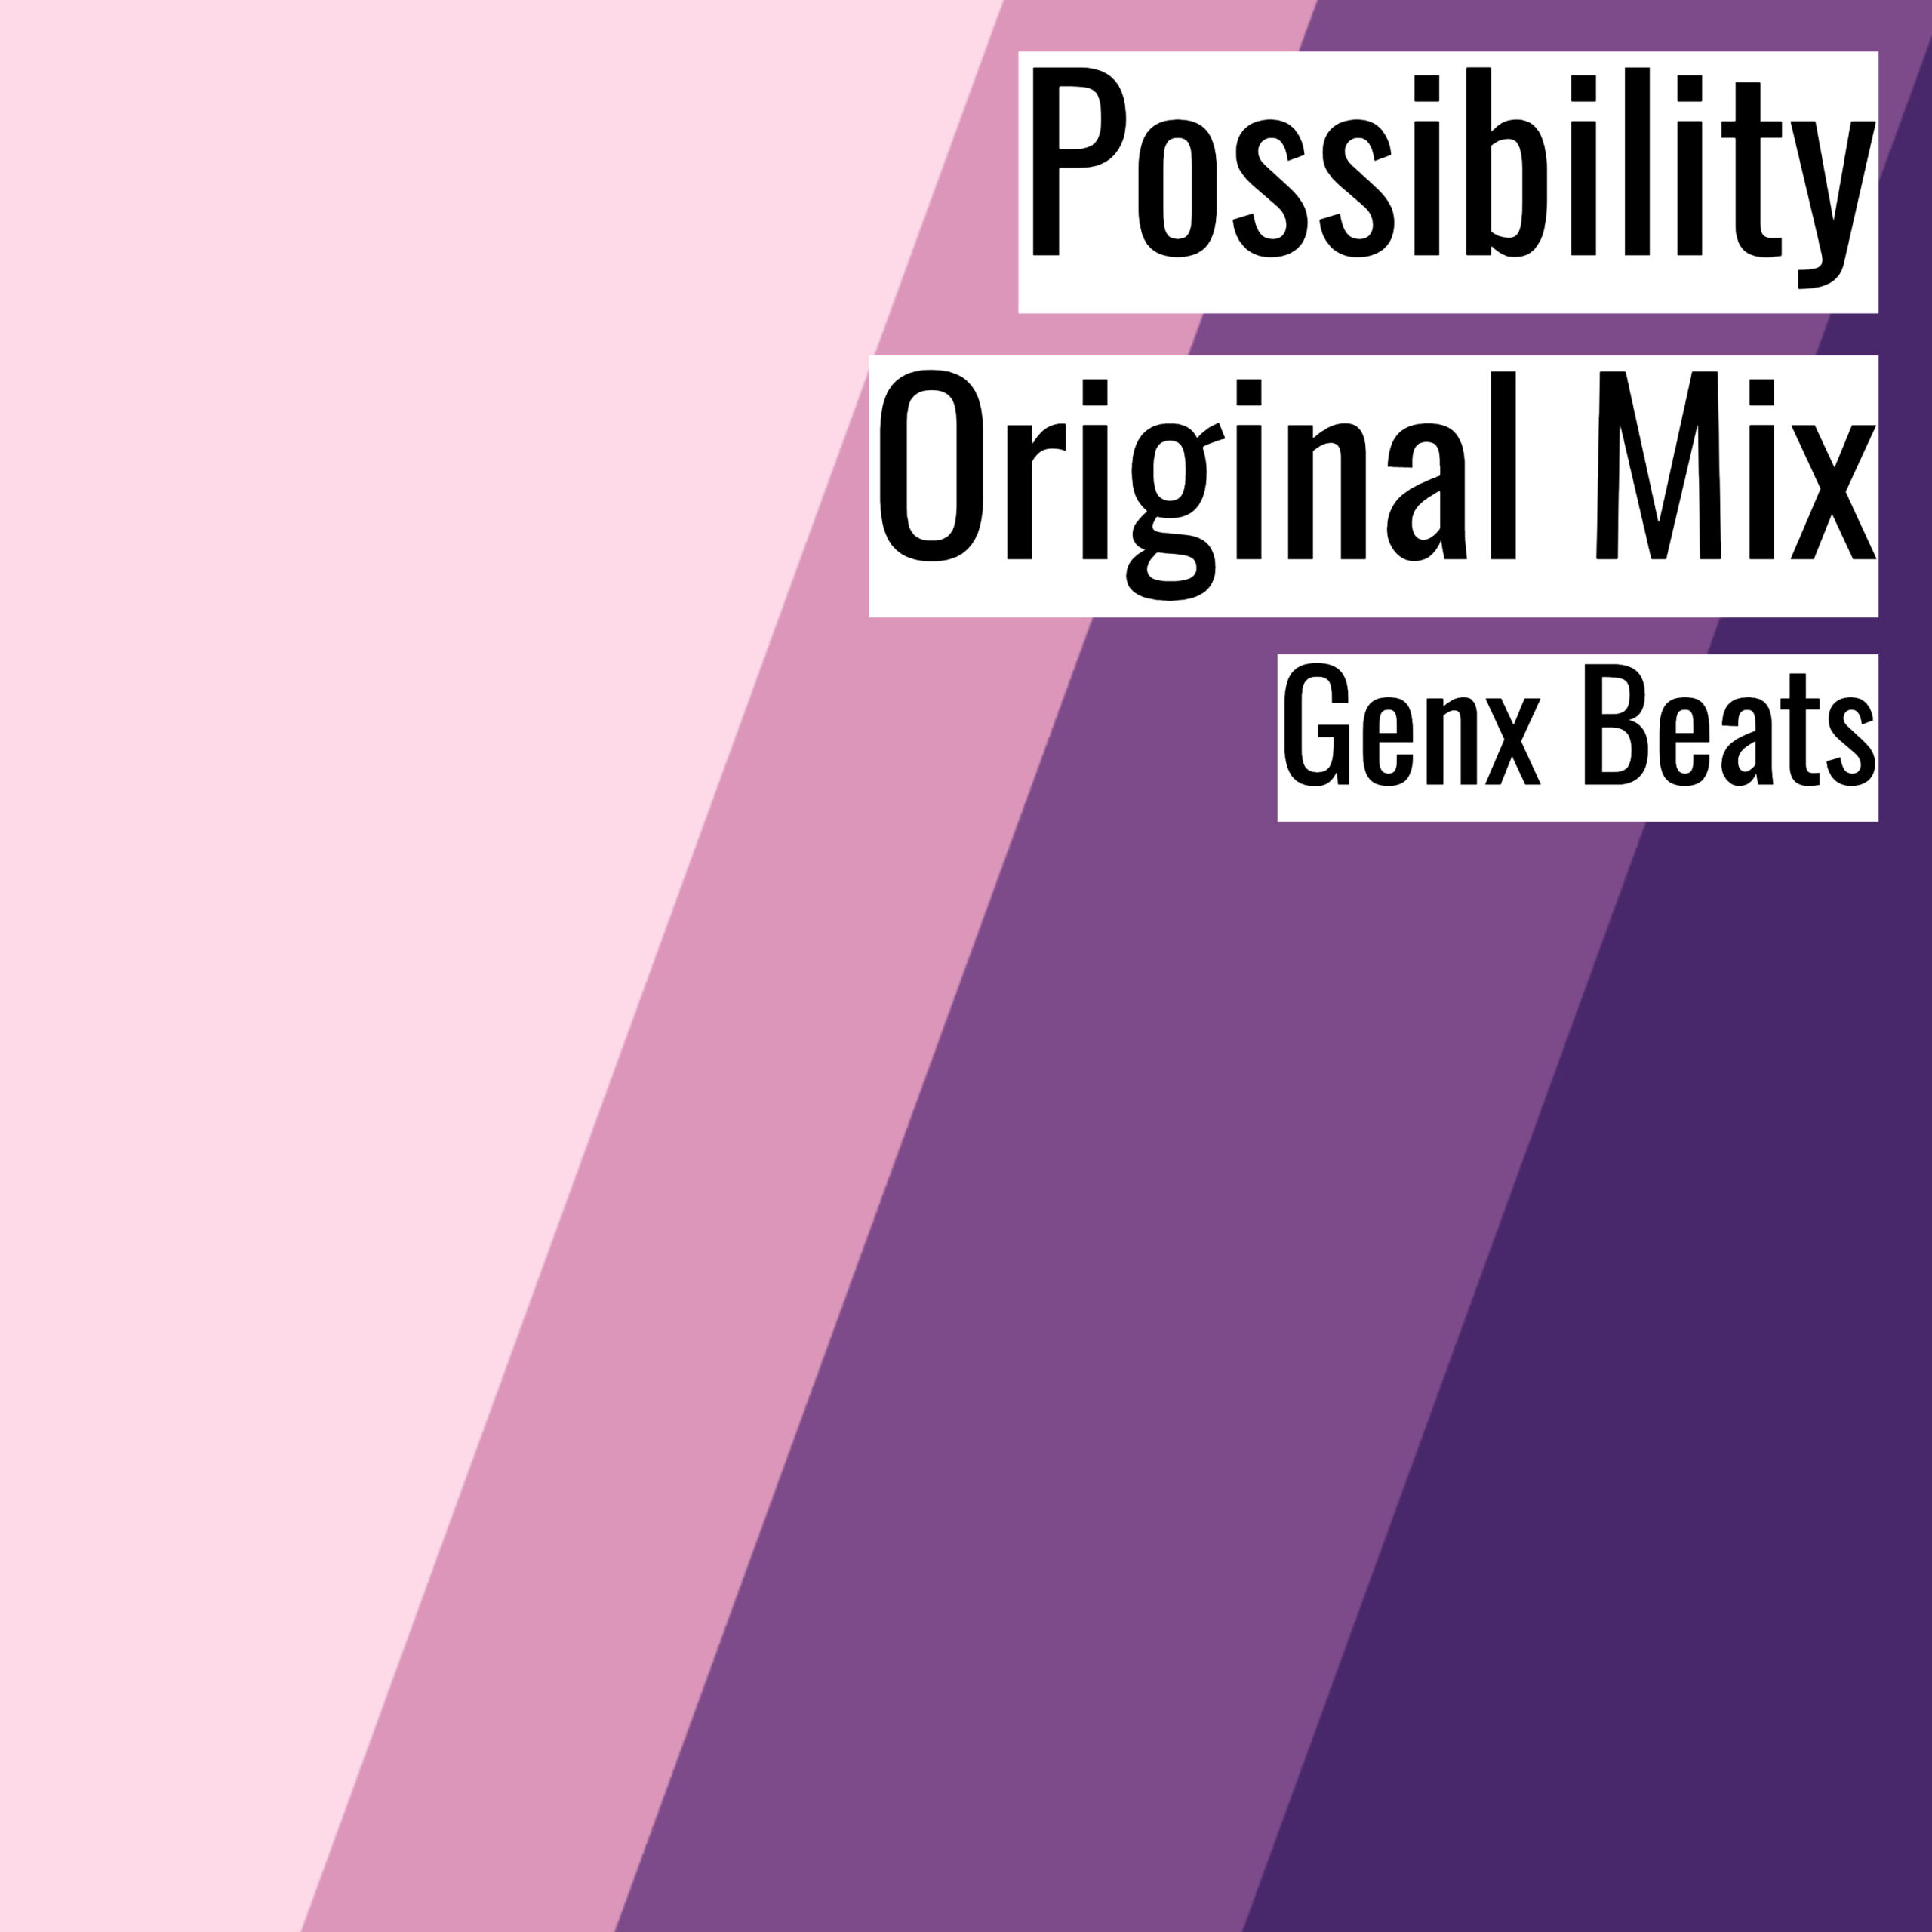 Possibility Original Mix scaled